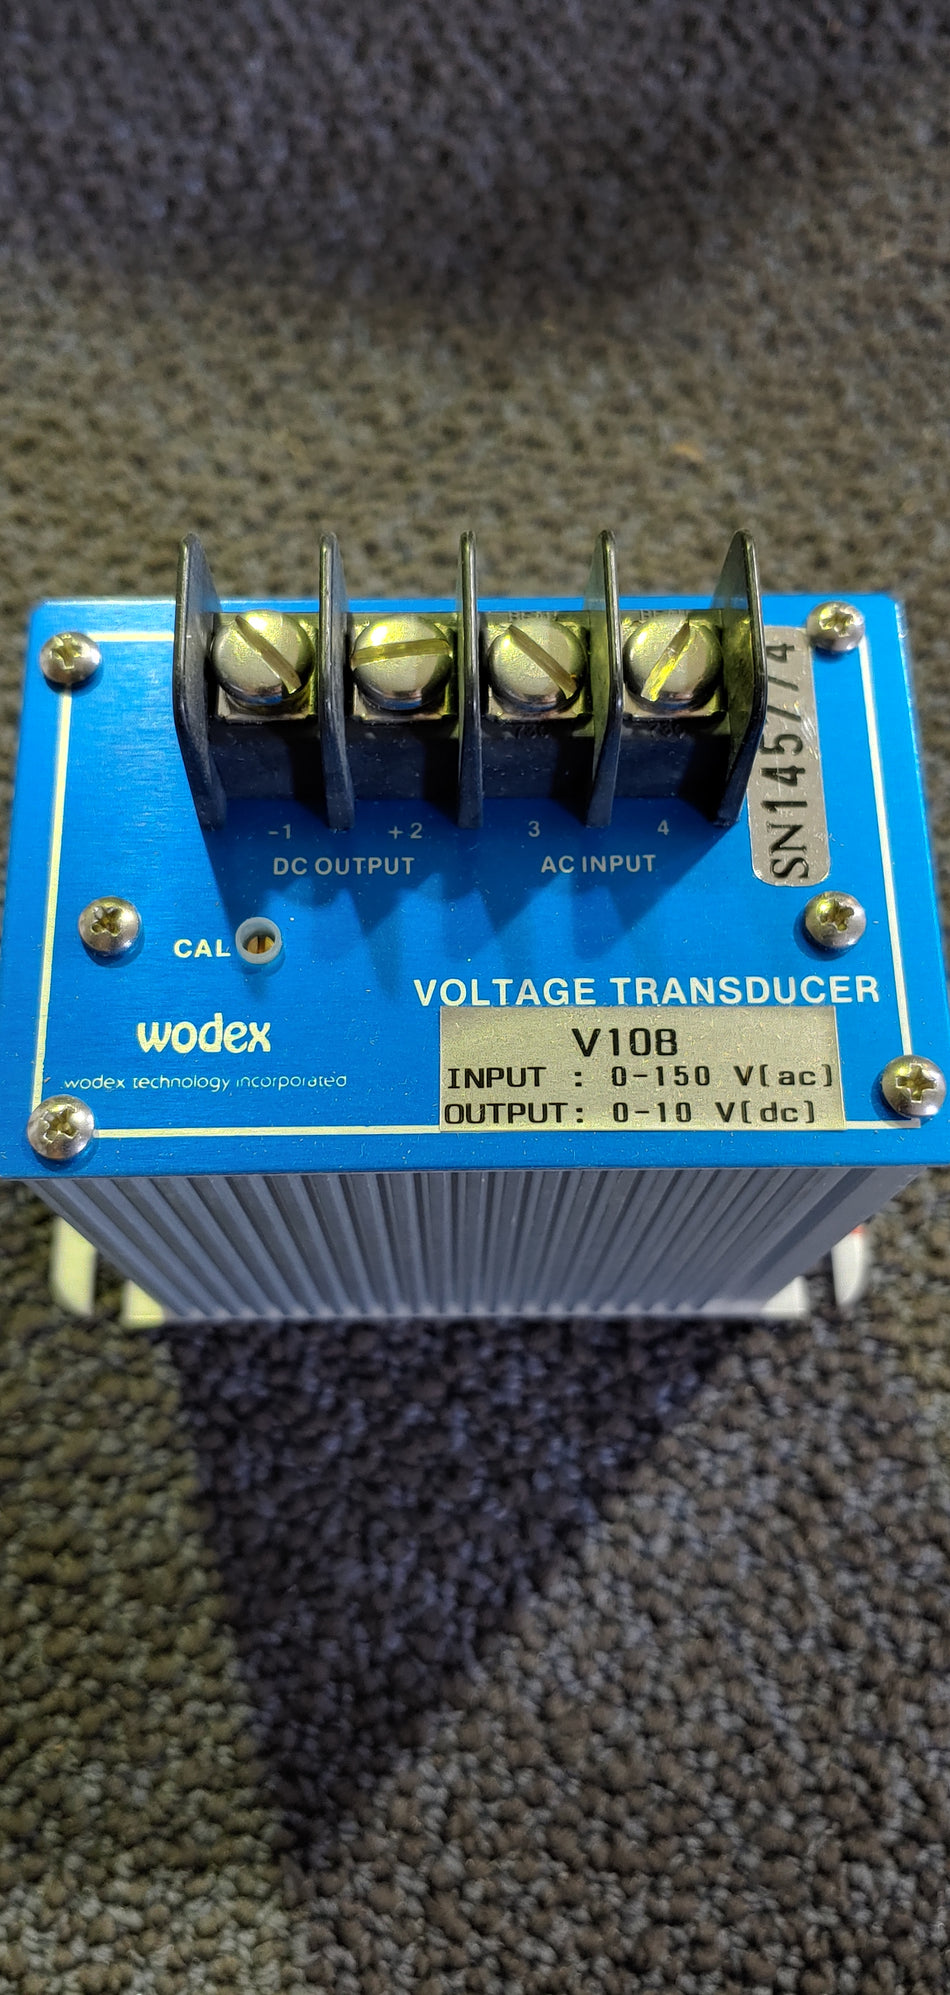 Wodex V108 Voltage Transducer